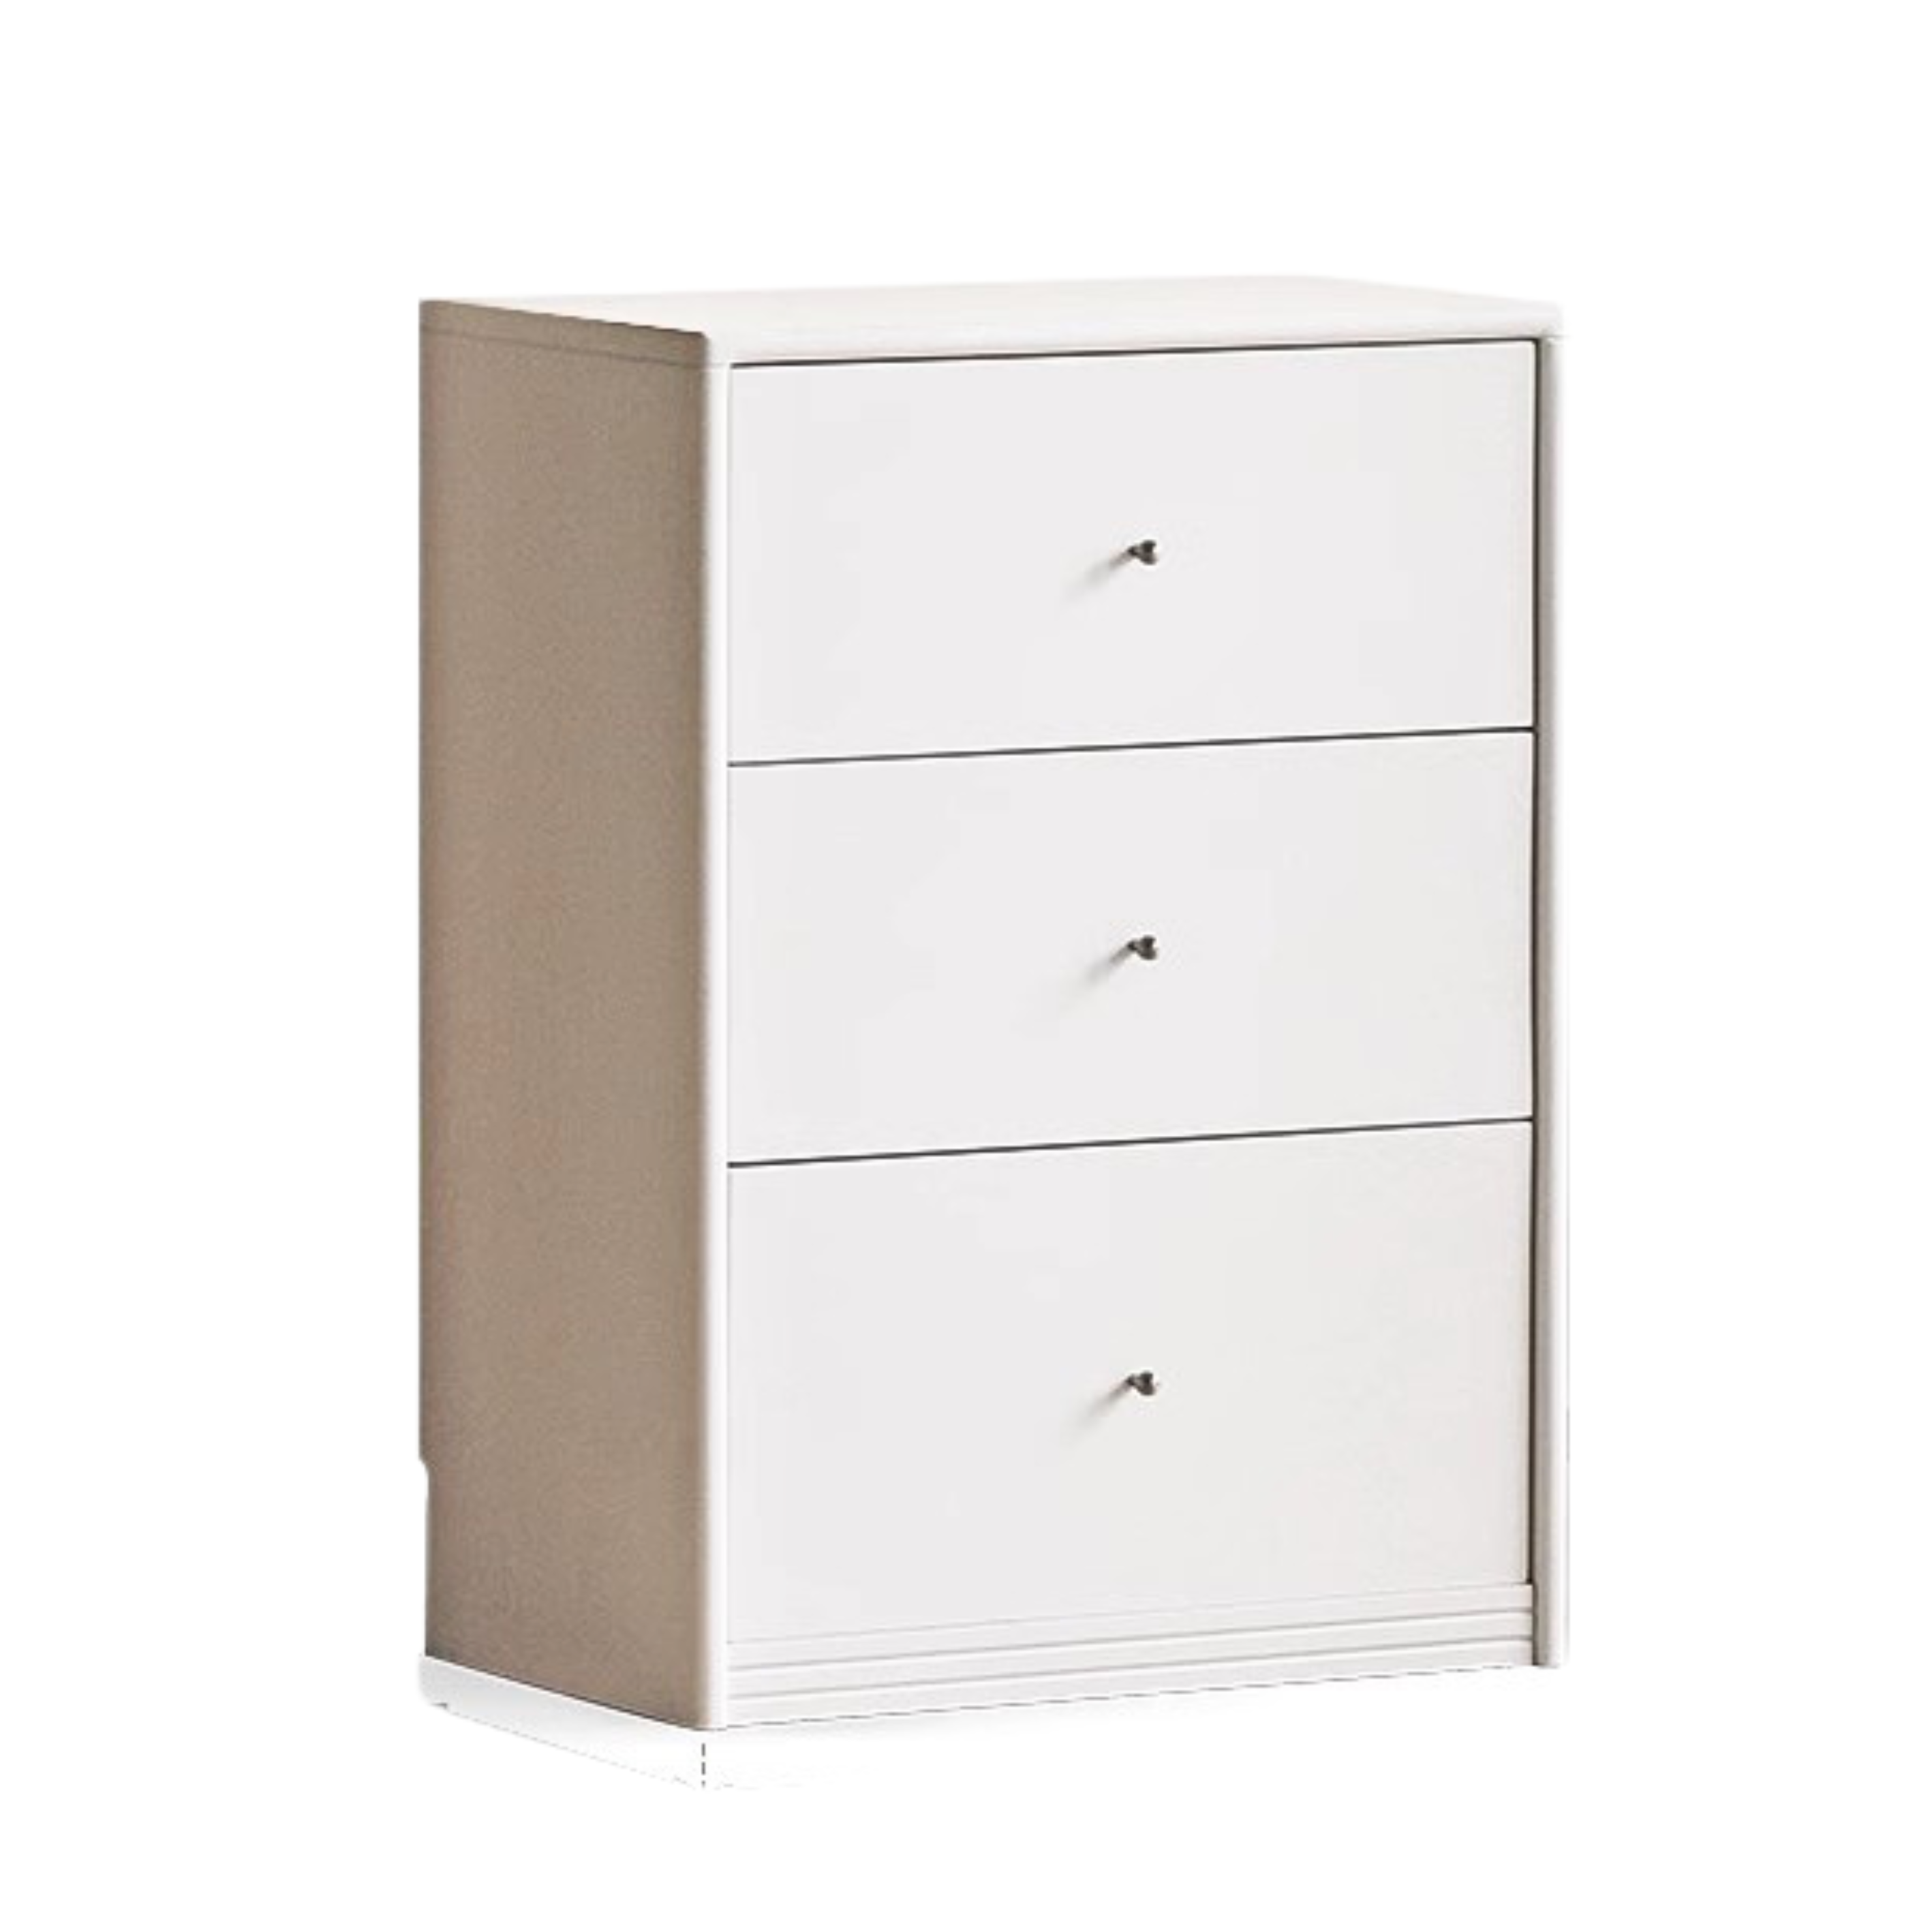 Poplar Solid Wooden Bookcase Cream White Free Combination Glass Door Display Cabinet